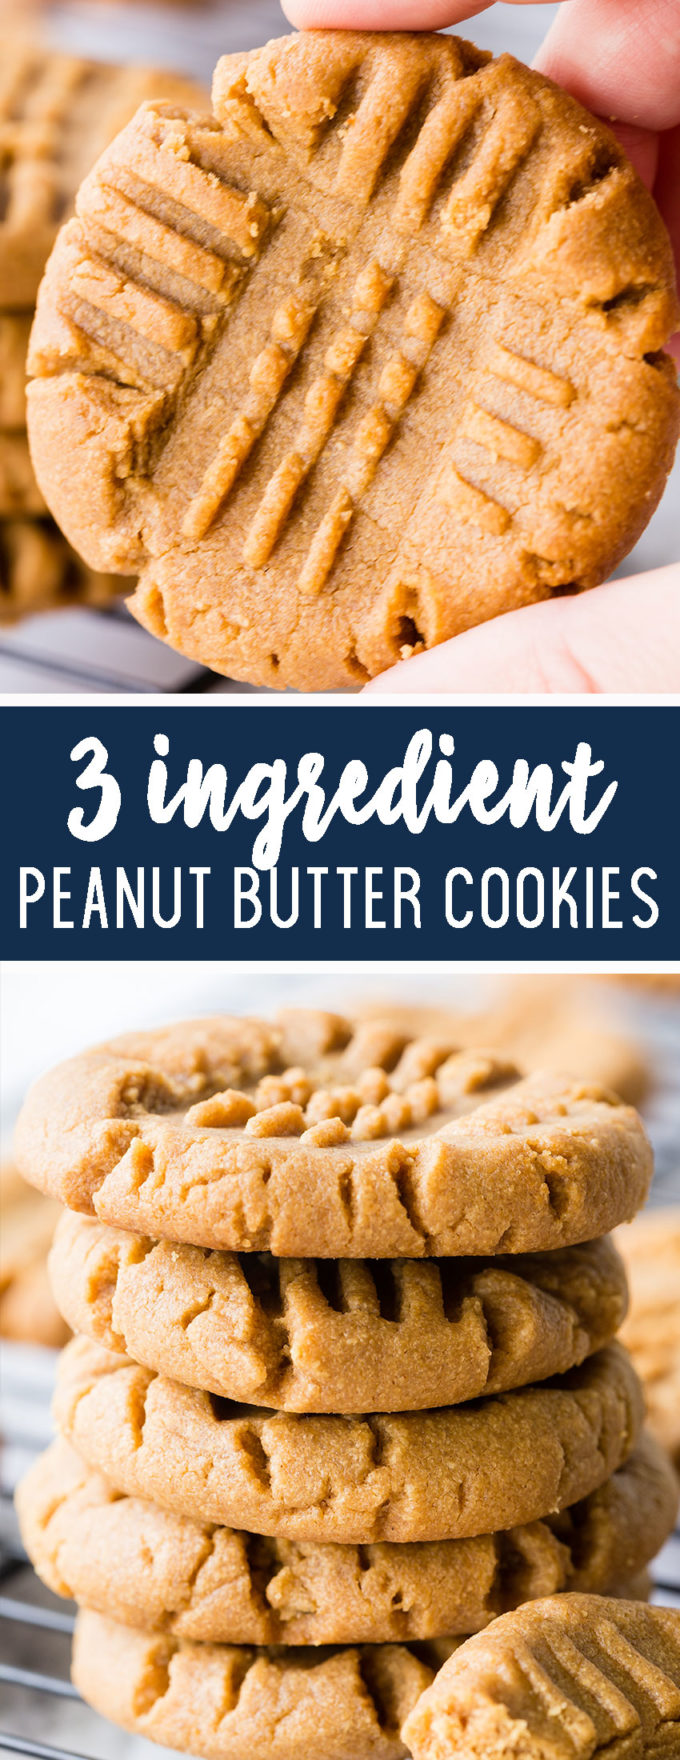 3 Ingredient Peanut Butter Cookies - Easy Peasy Meals